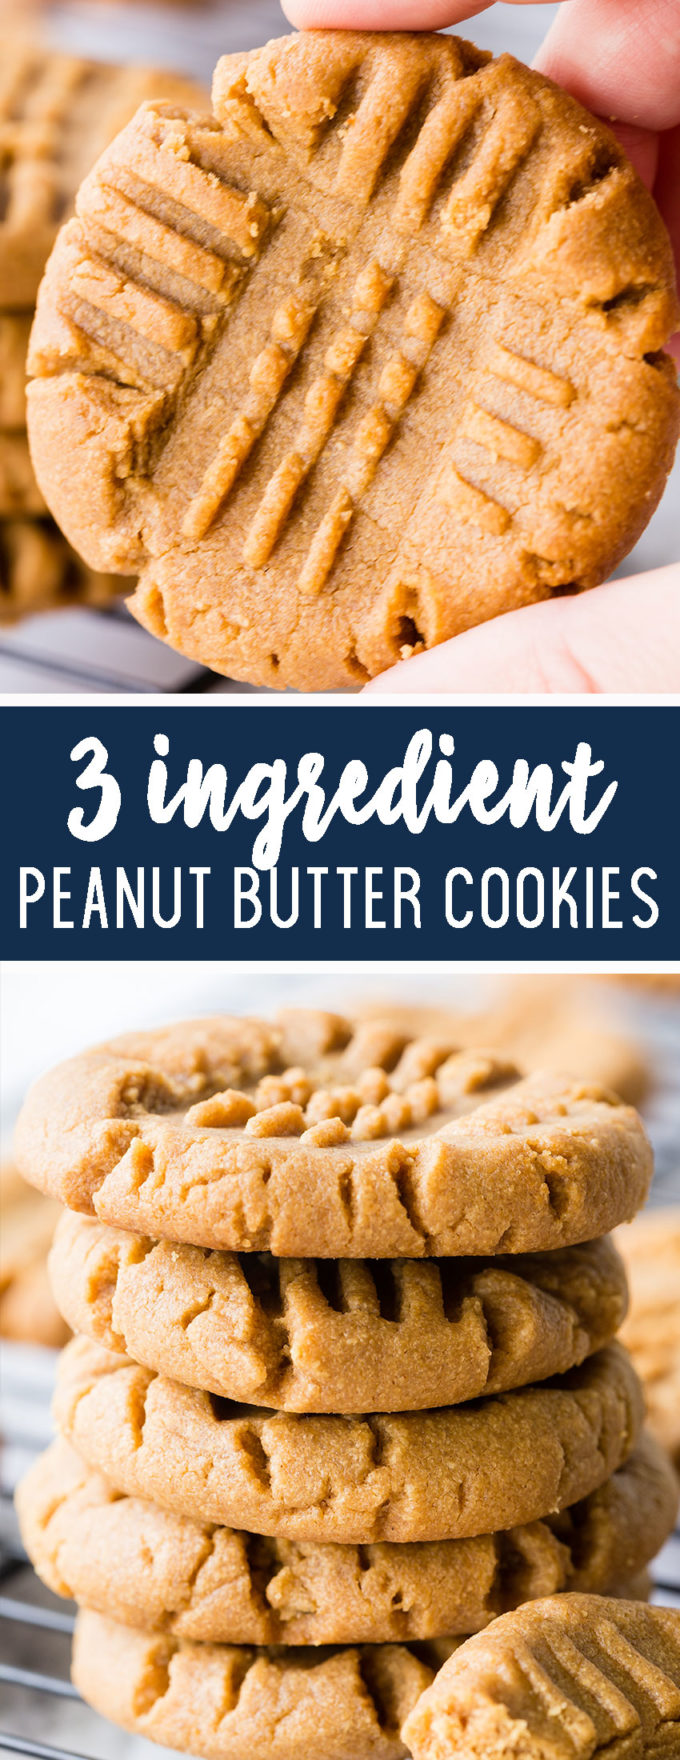 3 Ingredient Peanut Butter Cookies - Easy Peasy Meals